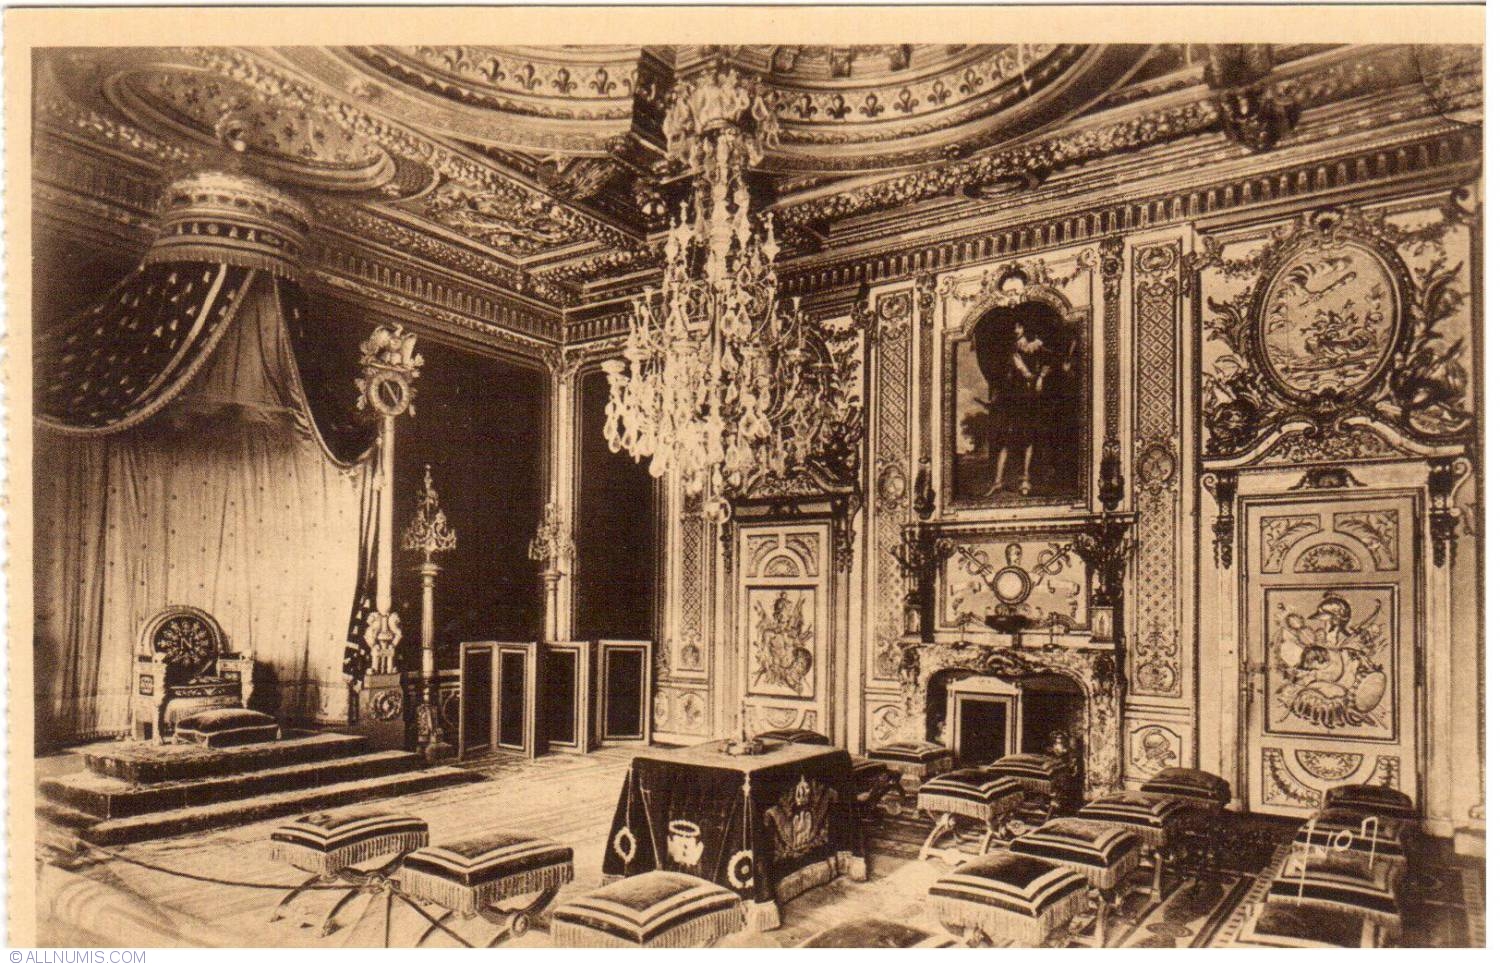 The Throne room, Salle du Trone. Chateau de Fontainebleau palace. Fontainebleau.Seine-et-Marne.France Stock Photo - Alamy